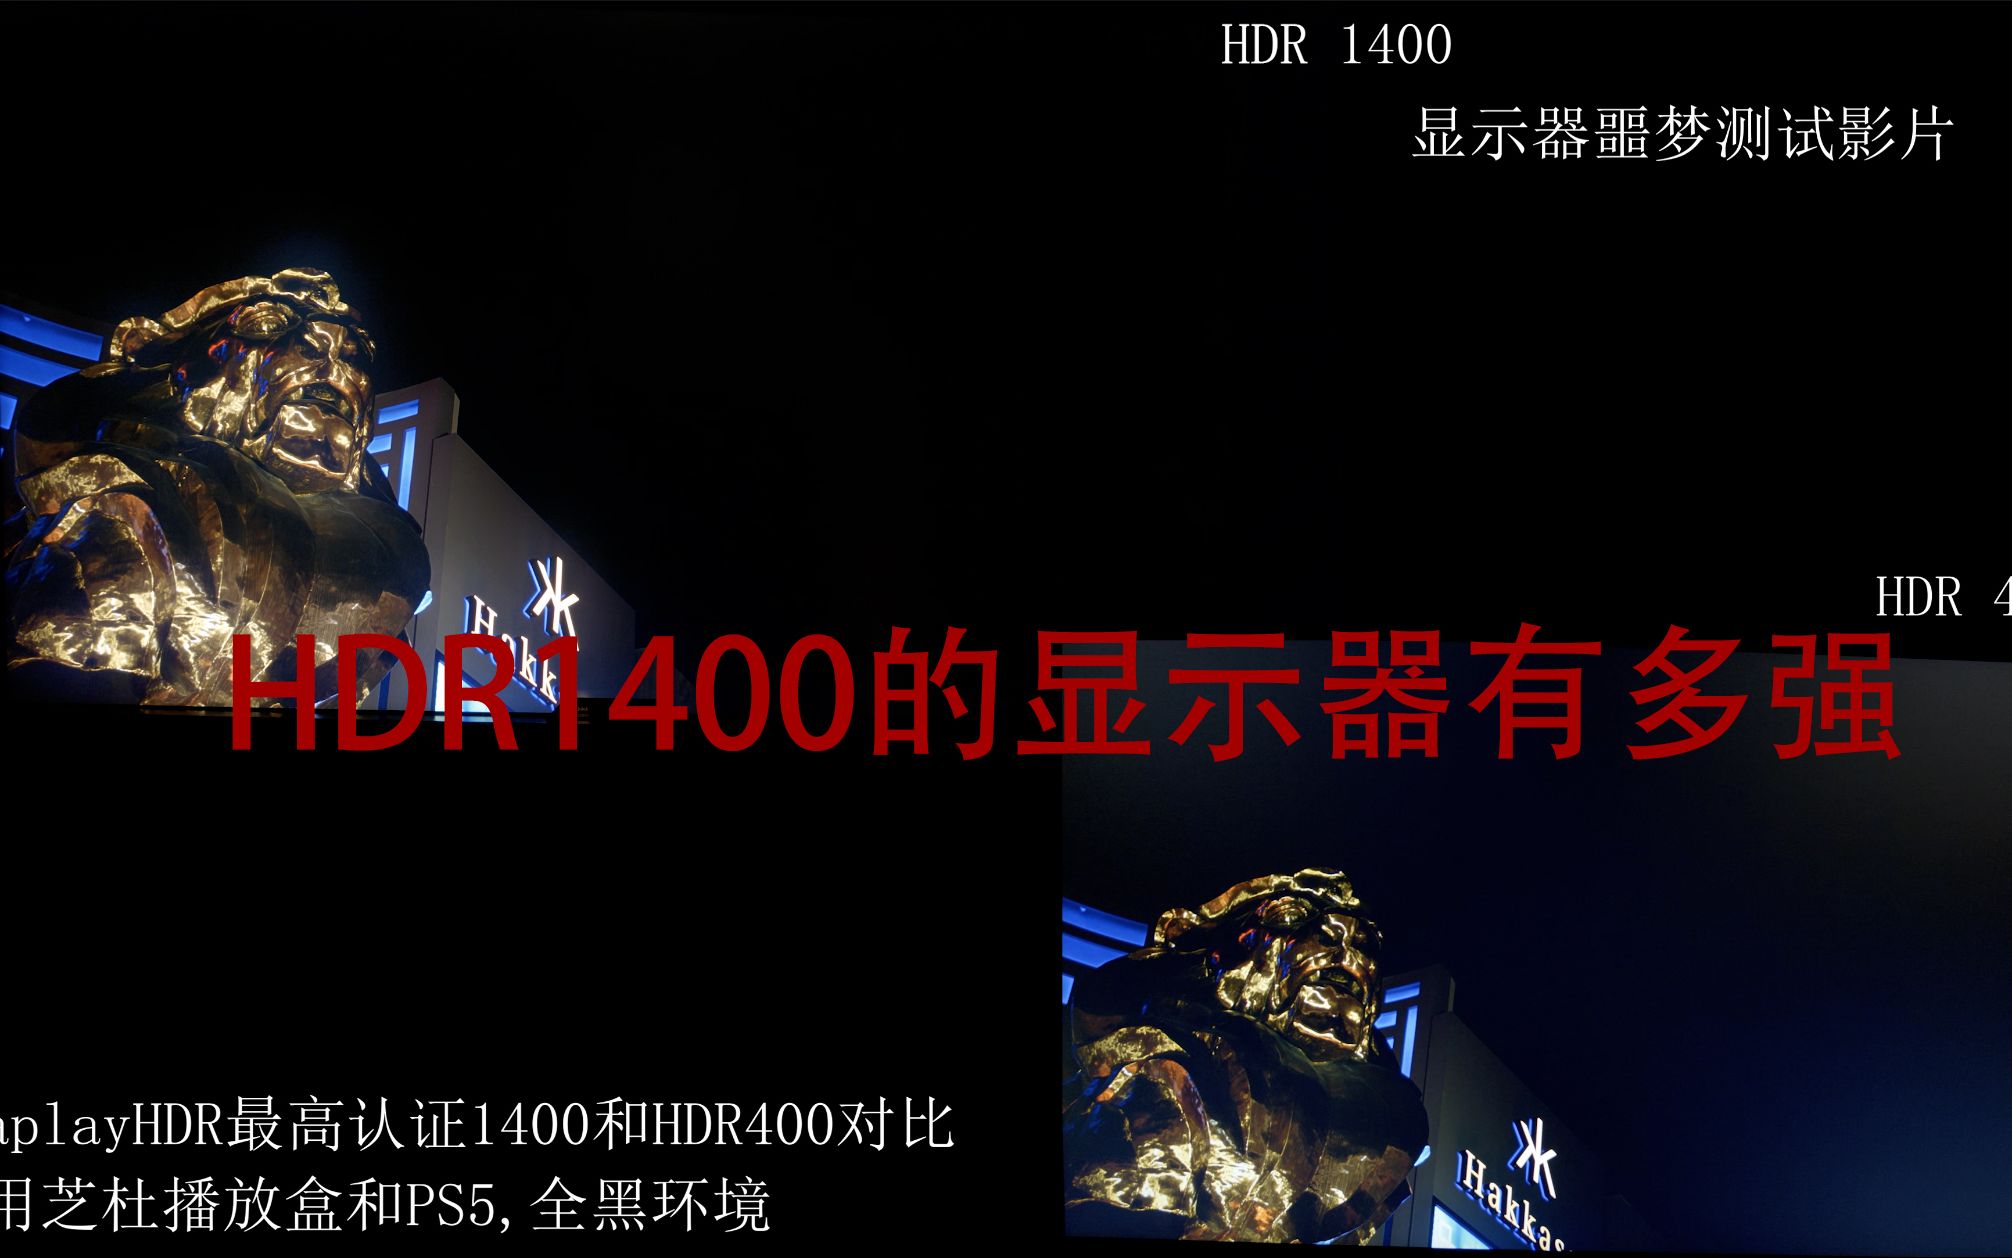 HDR最高标准1400和HDR400对比，HDR1400有多强？